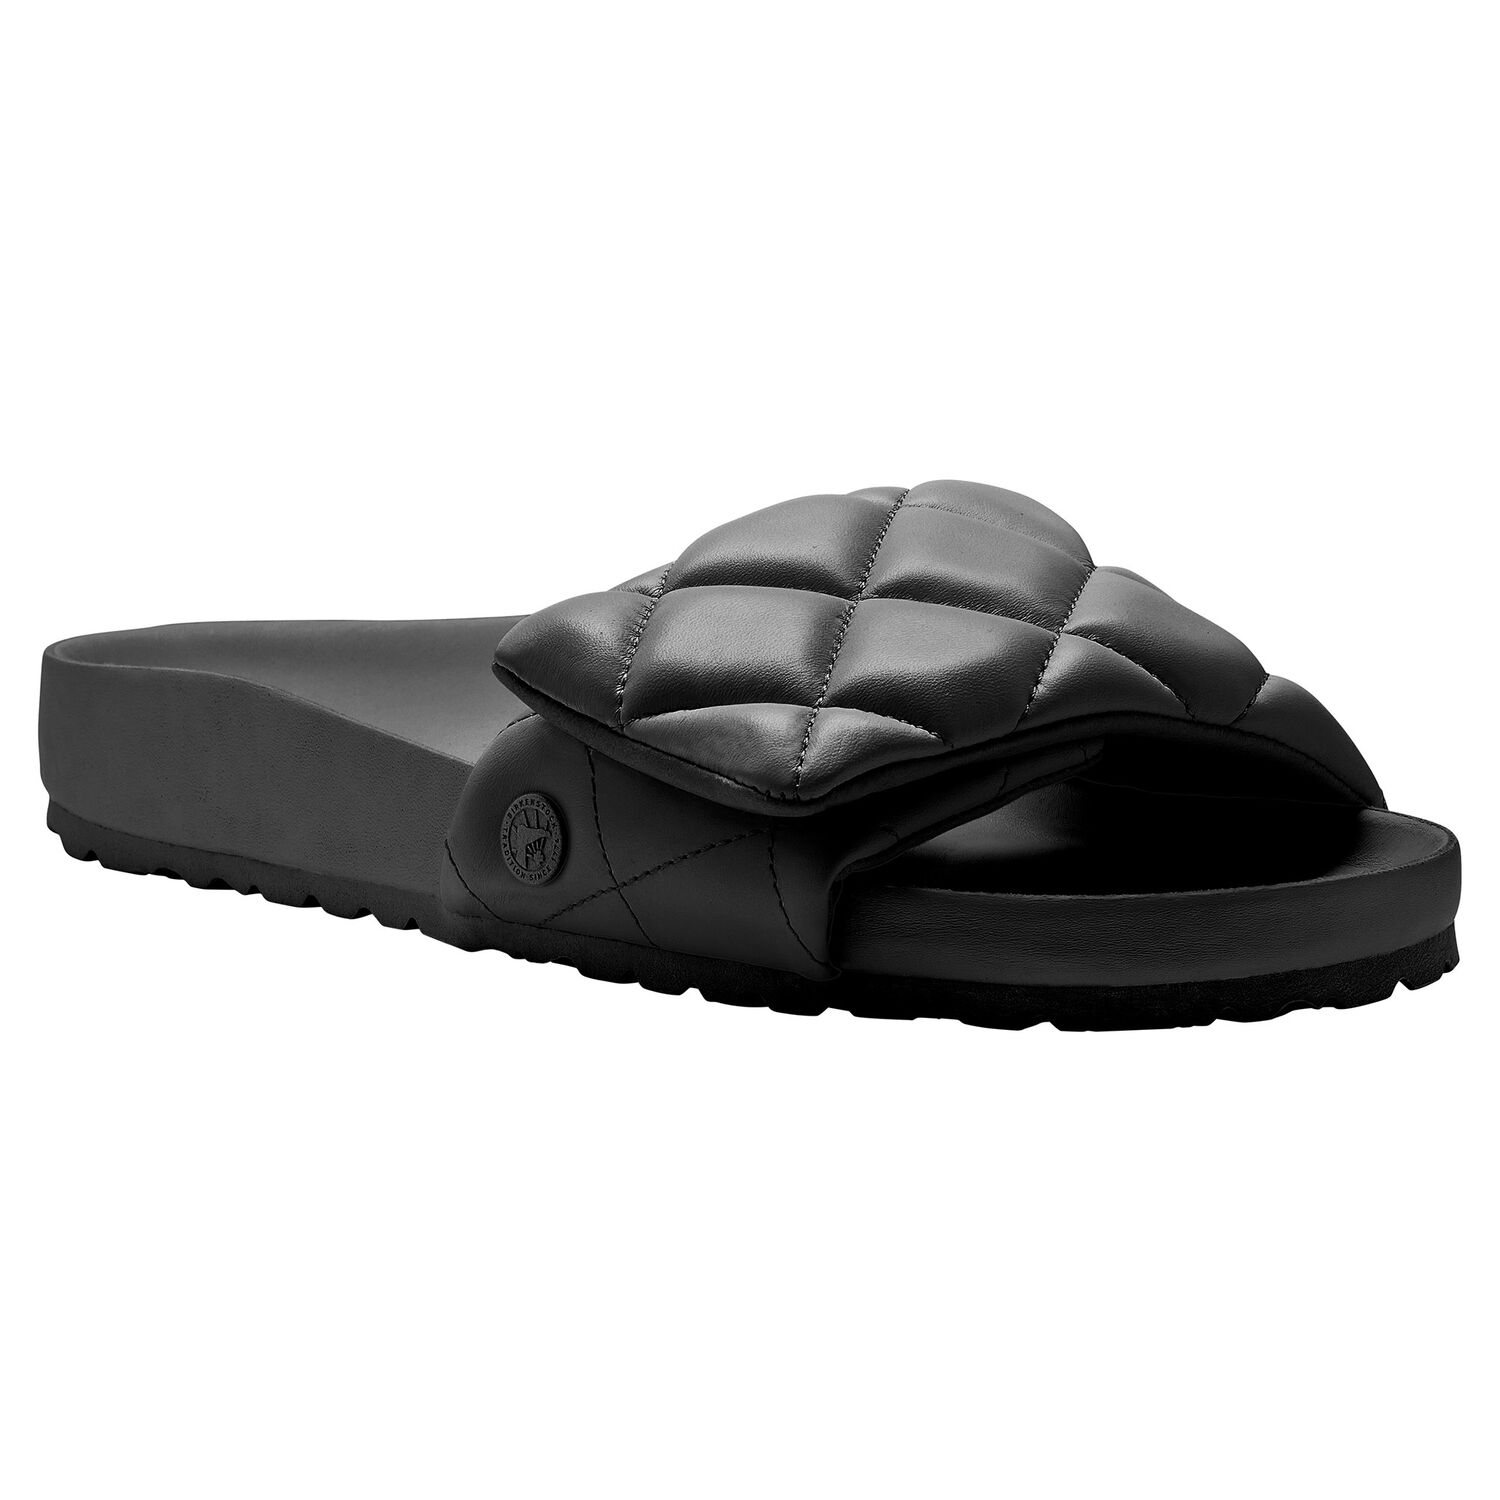 Chanel Interlocking CC Logo Leather Flip Flops - Black Sandals